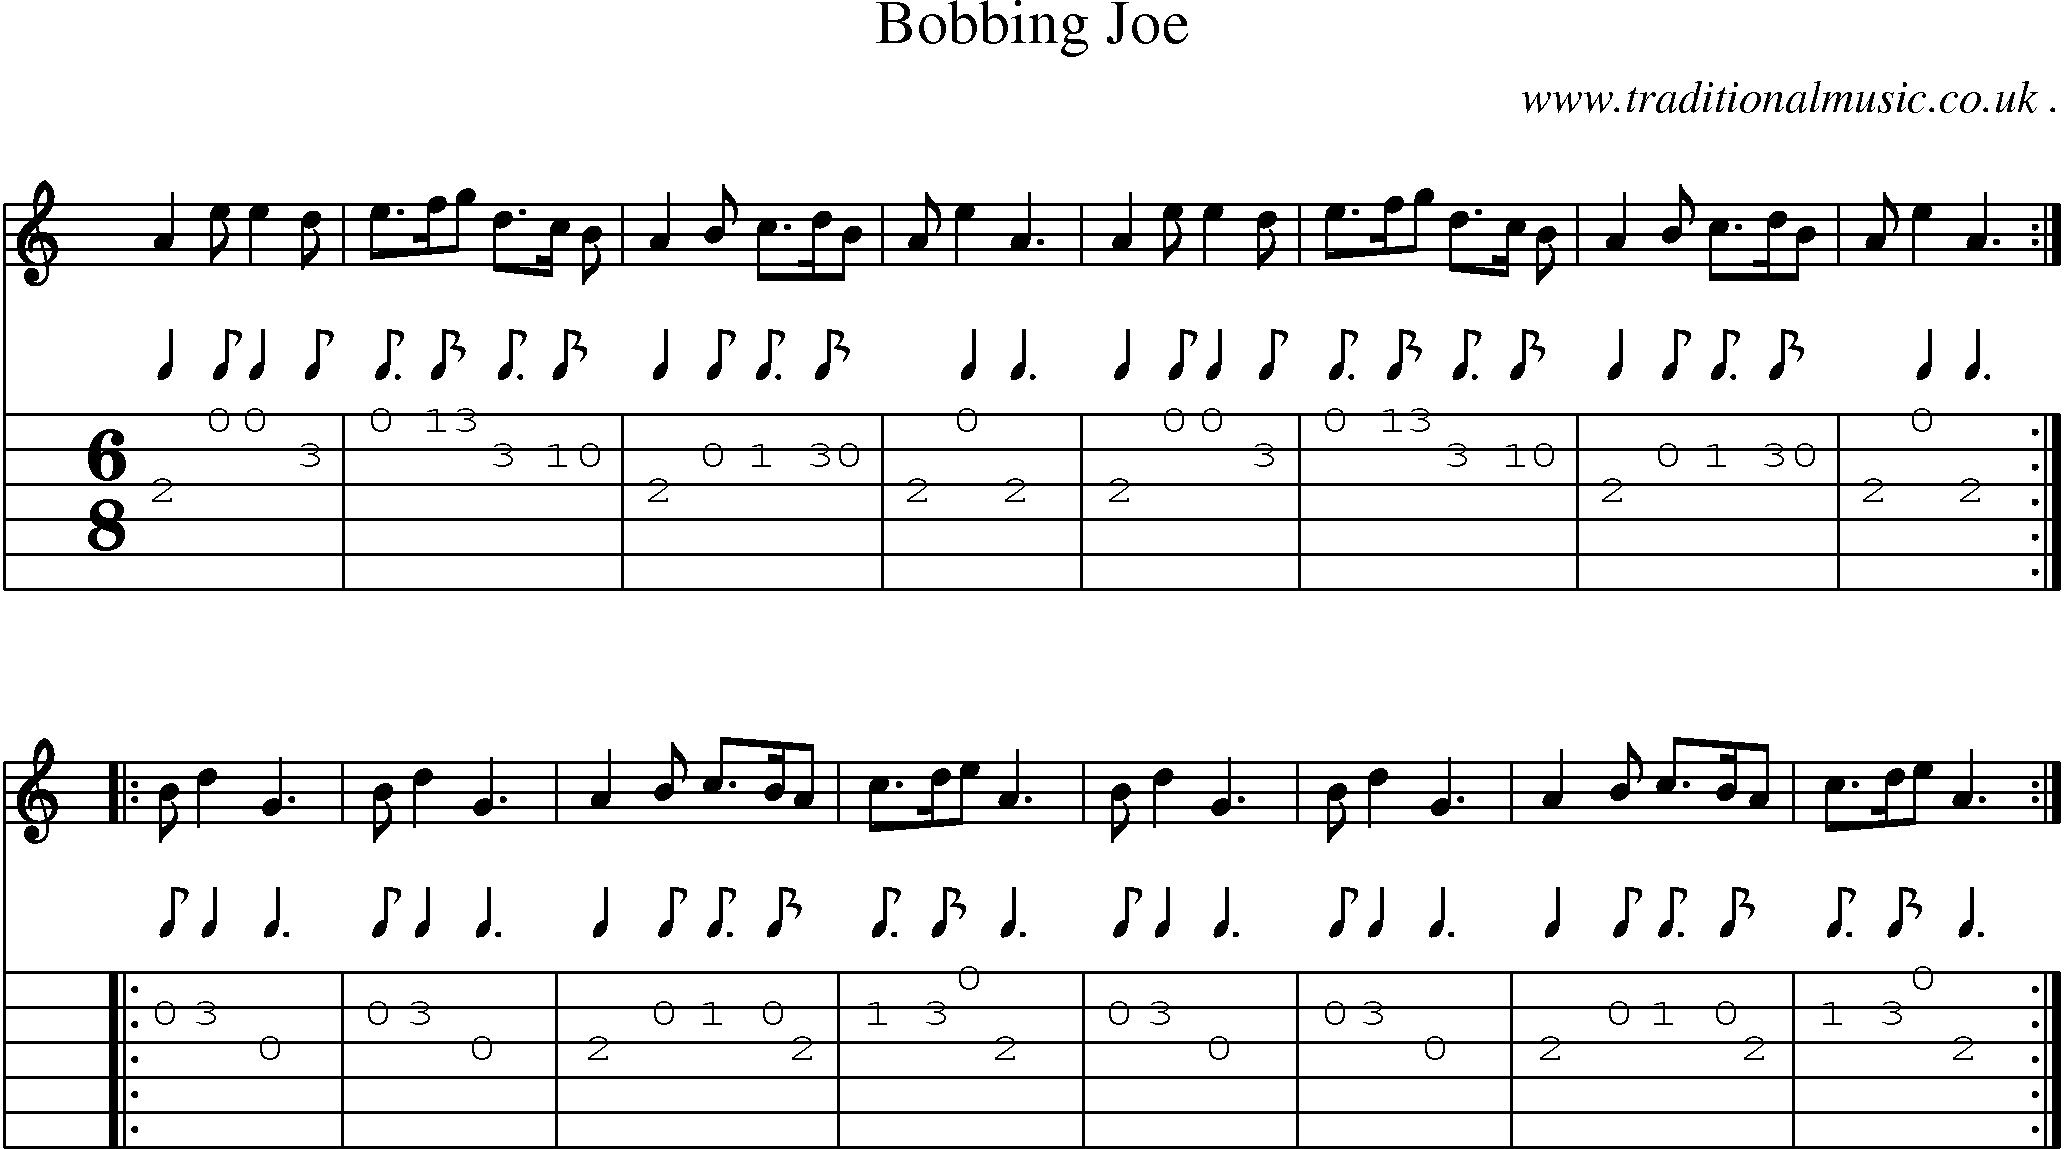 Sheet-Music and Guitar Tabs for Bobbing Joe